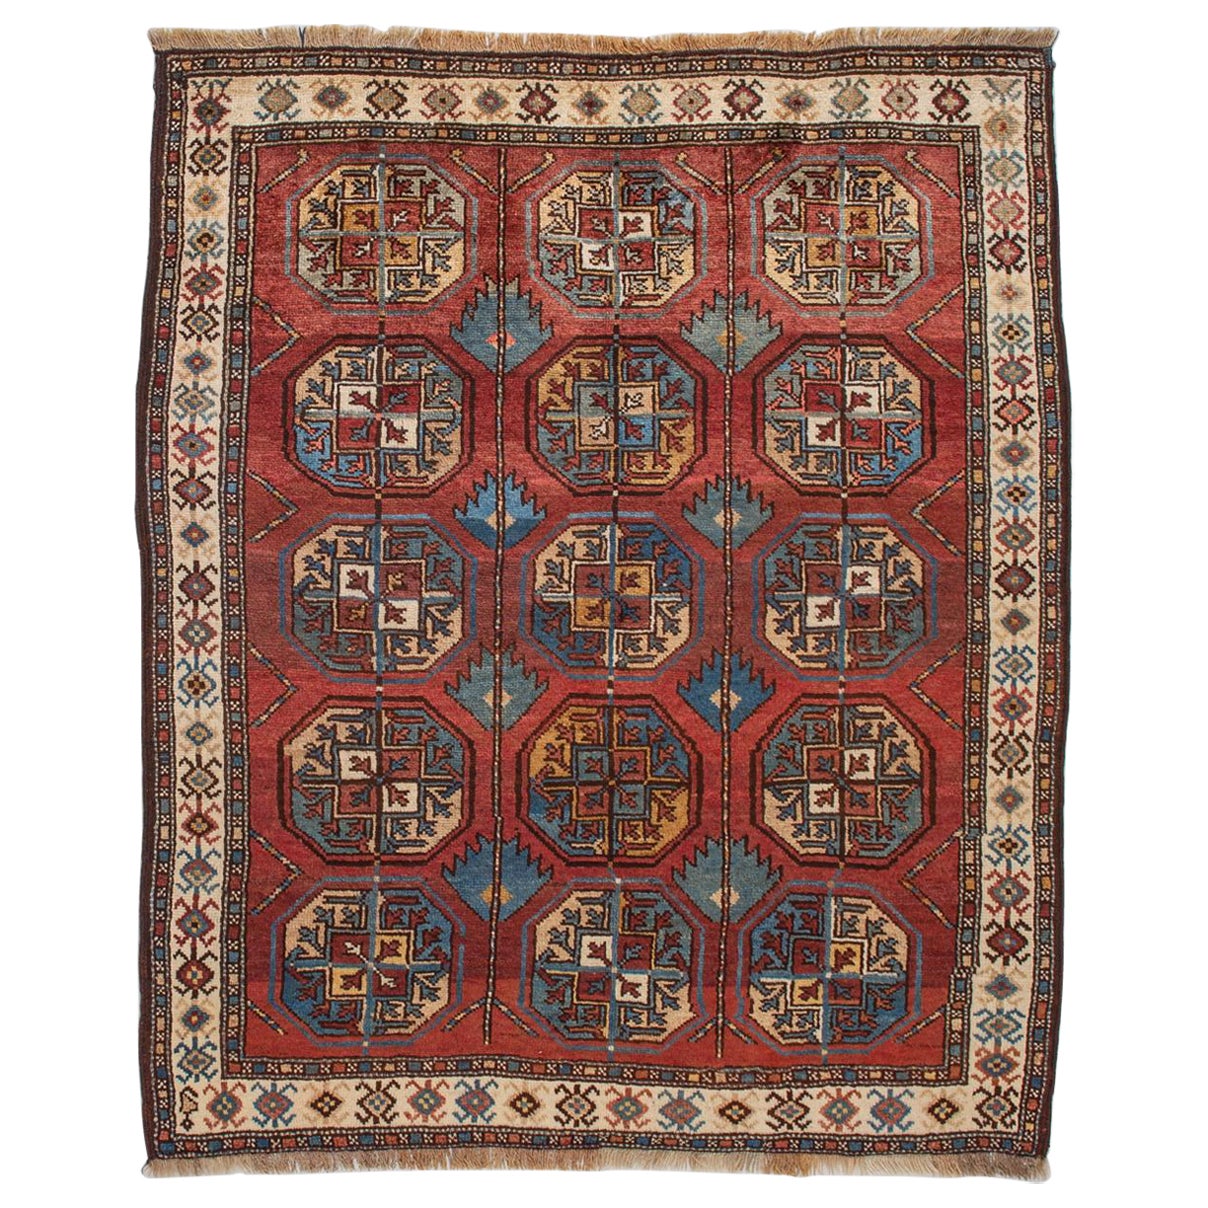 Armenian Carpet with Bokhara Design